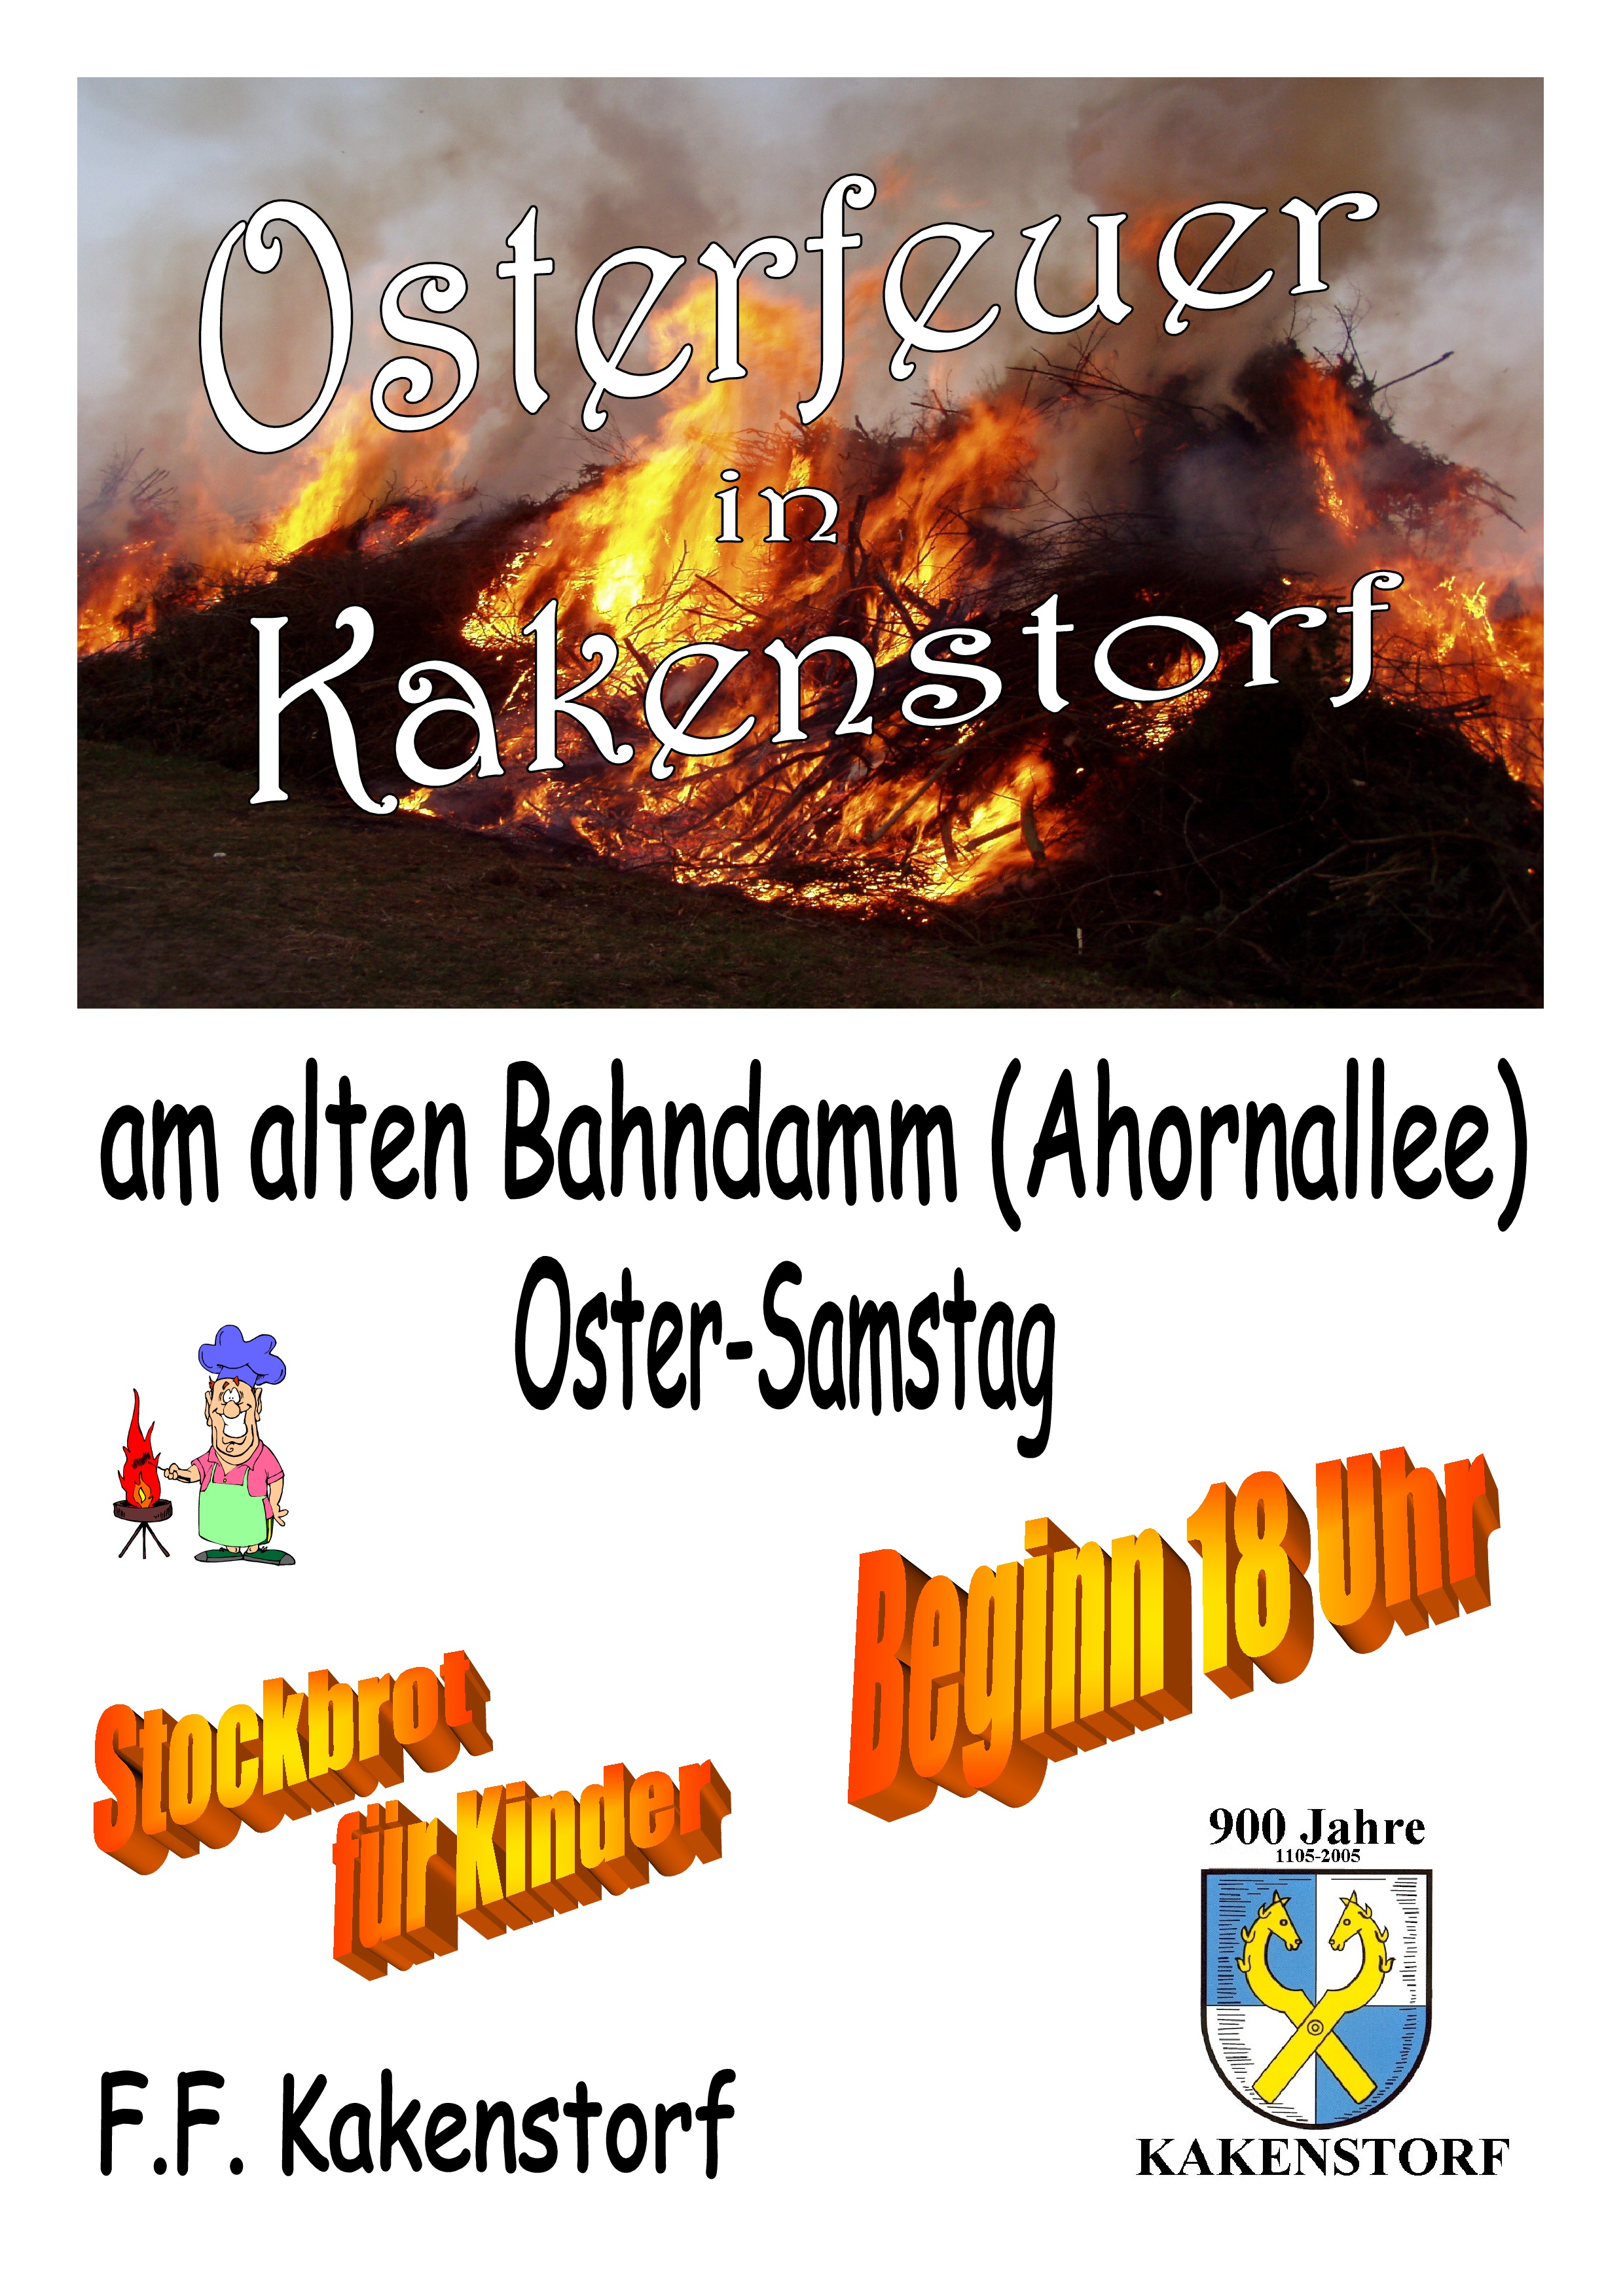 Osterfeuer Plakat DIN A4 mit Feuer